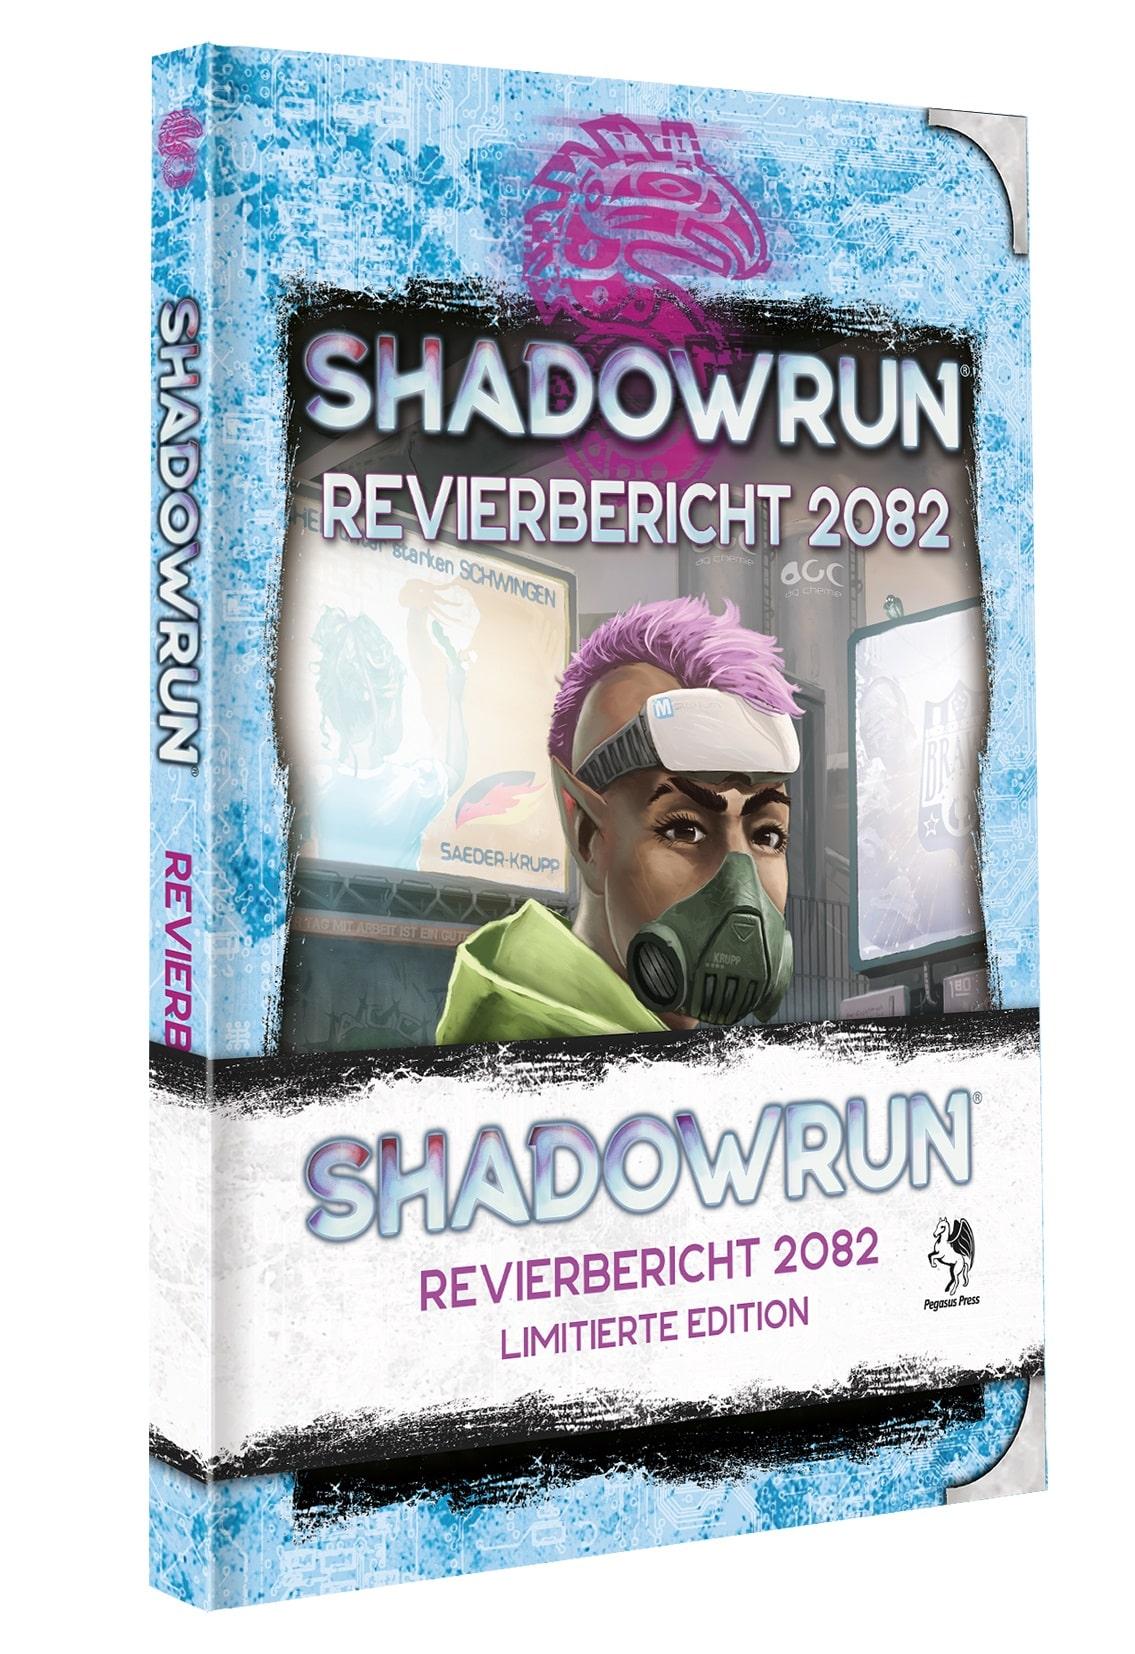 Shadowrun 6 - Revierbericht 2082 (limitierte Ausgabe) HC